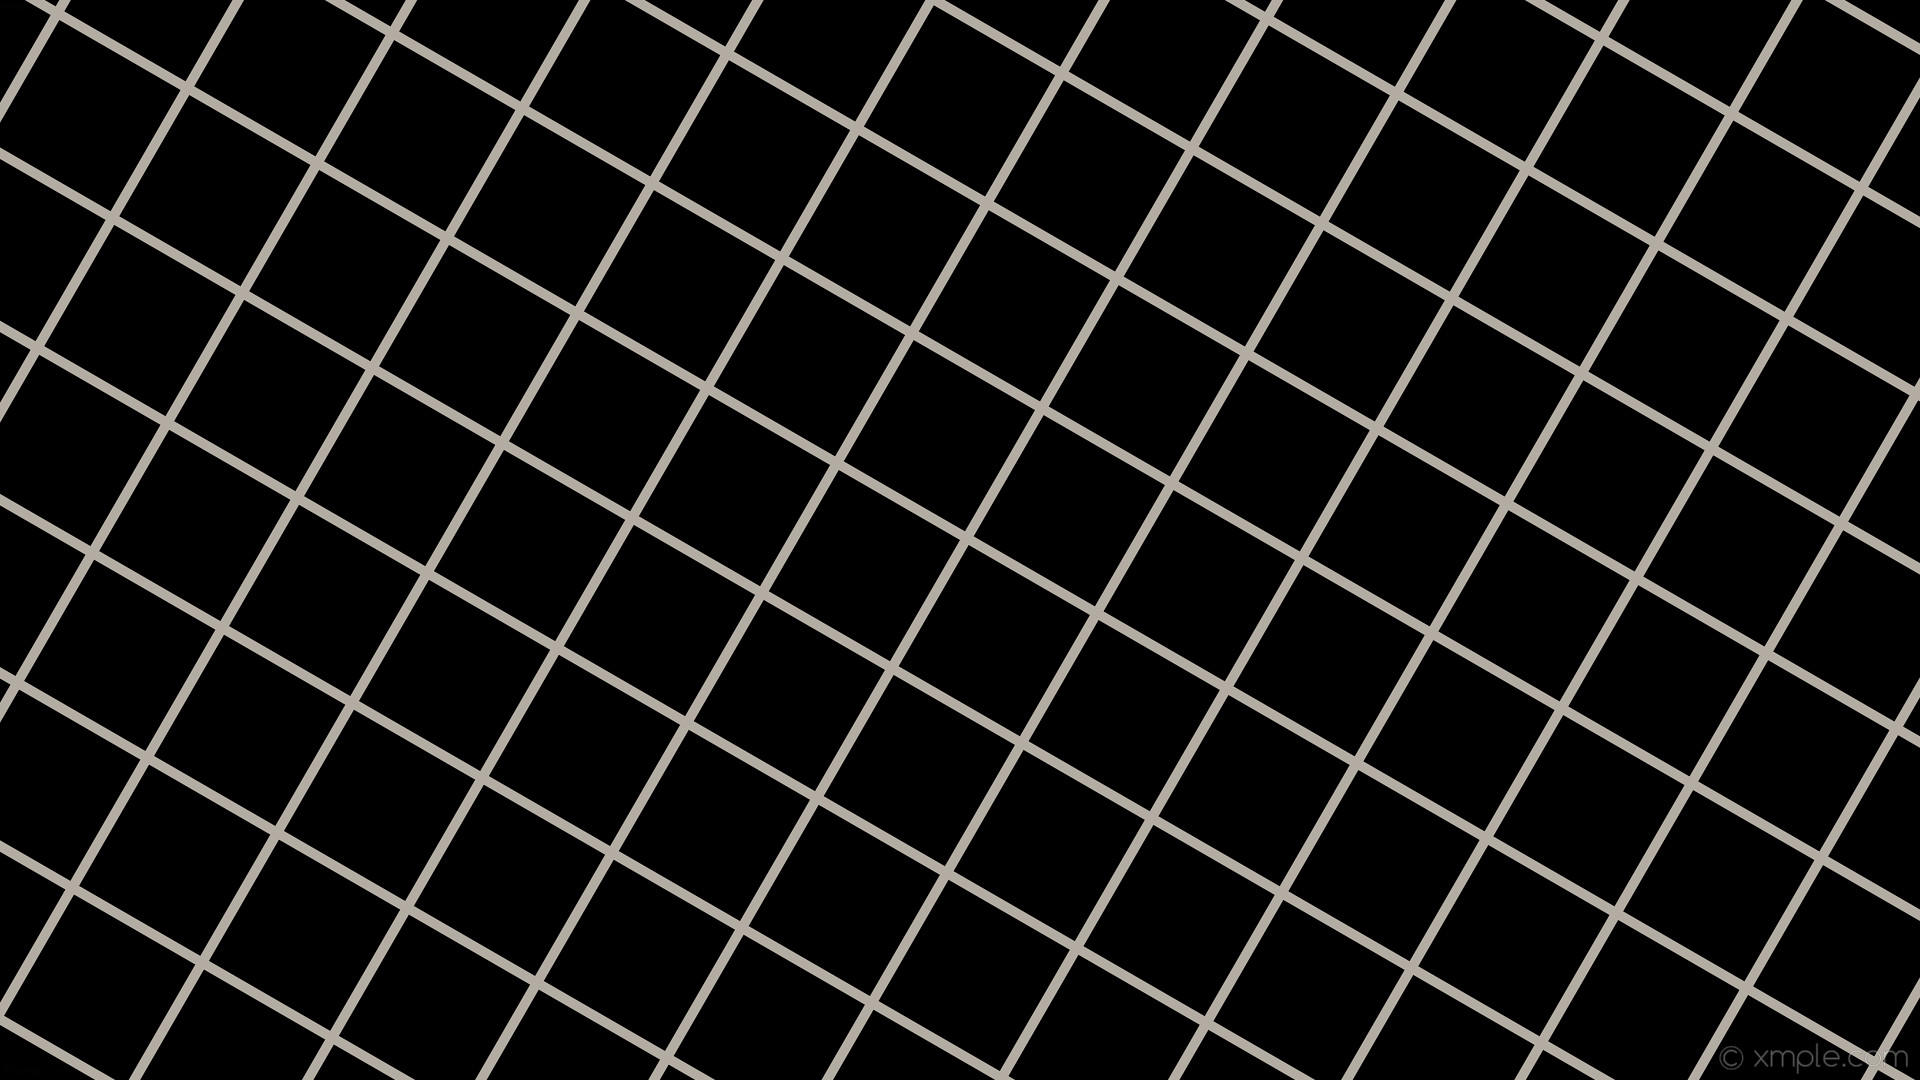 1920x1080 wallpaper graph paper black white grid old lace #000000 #fdf5e6 60Â° 10px  150px